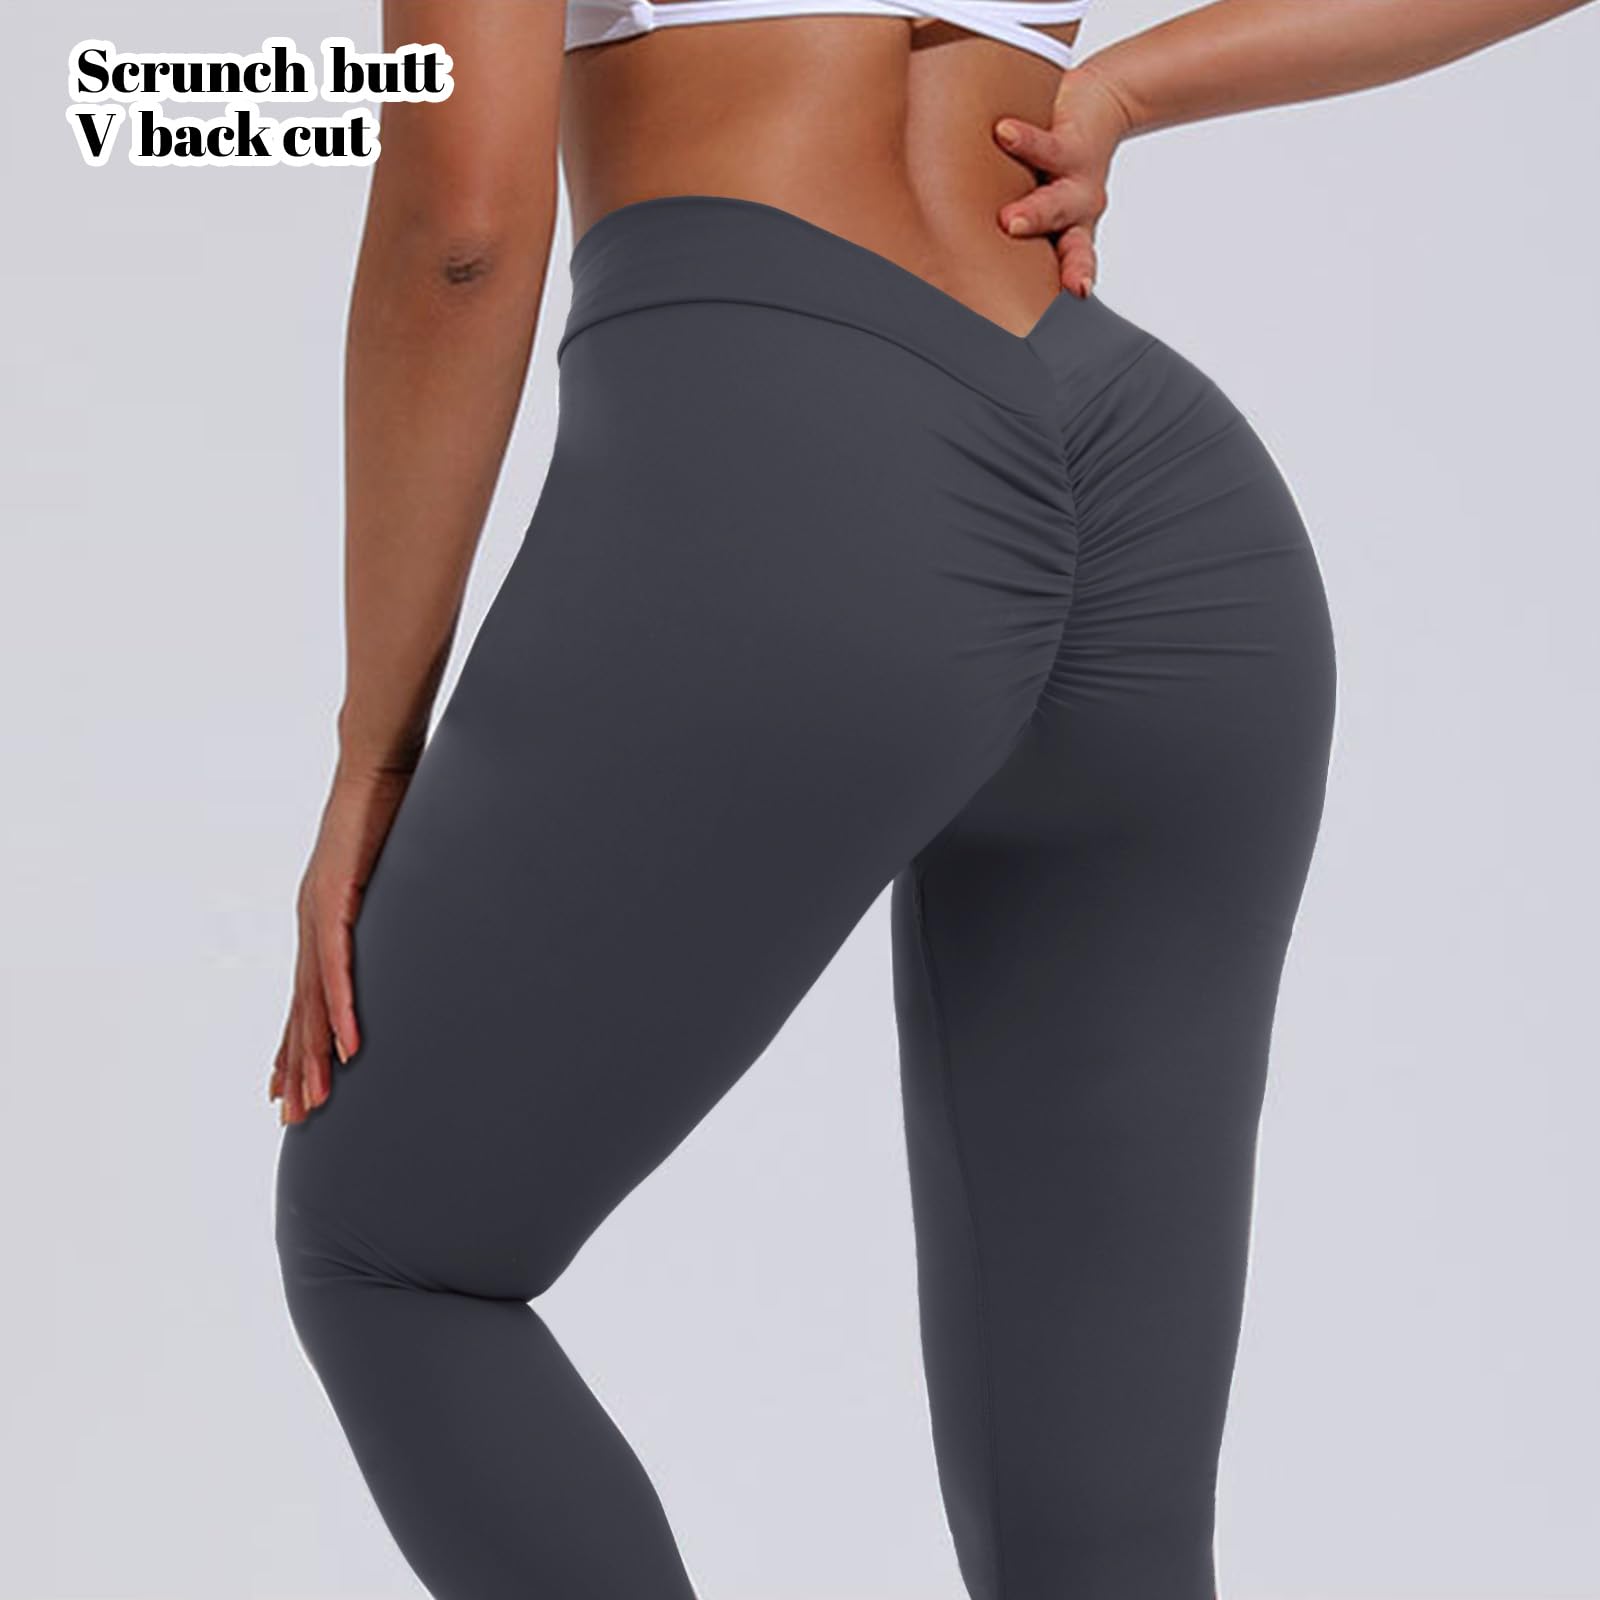 MAYROUND Womens V-Back Scrunch Workout Gym Leggings Butt Lifting